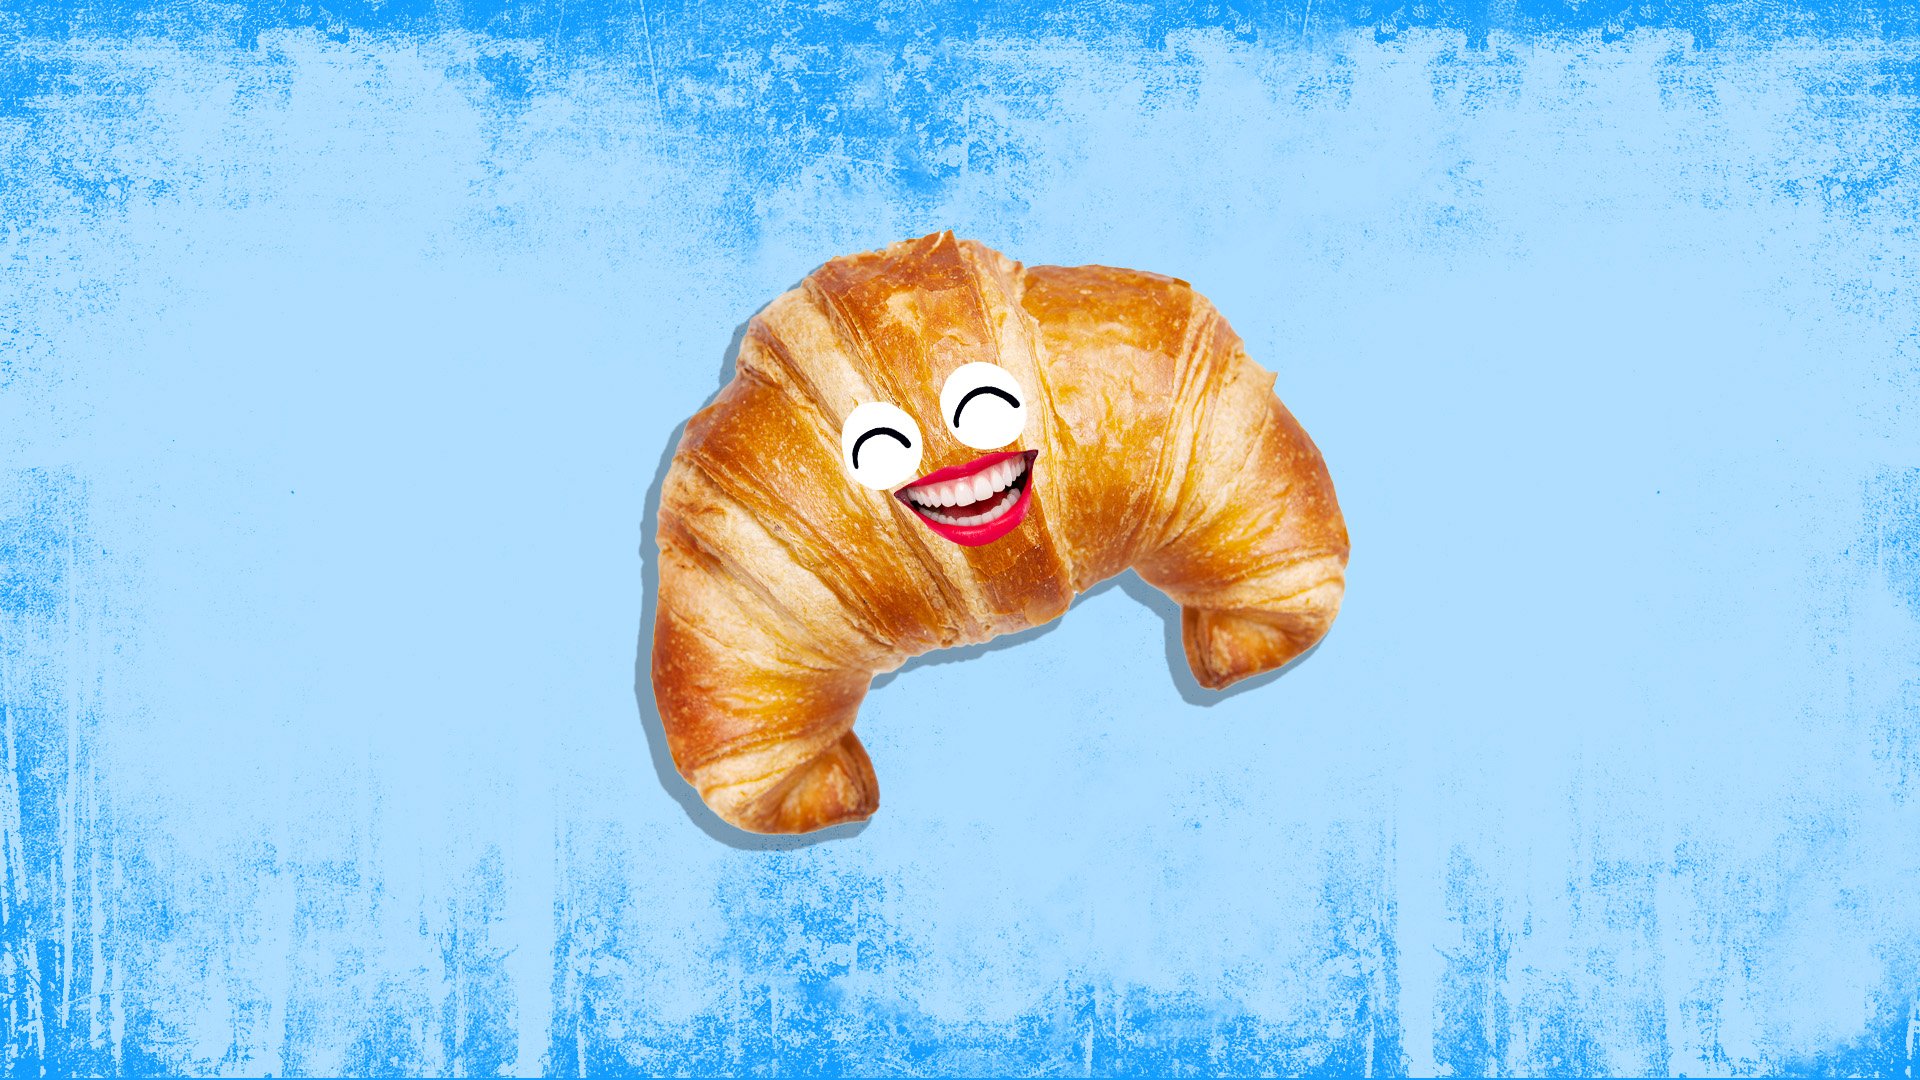 A happy croissant